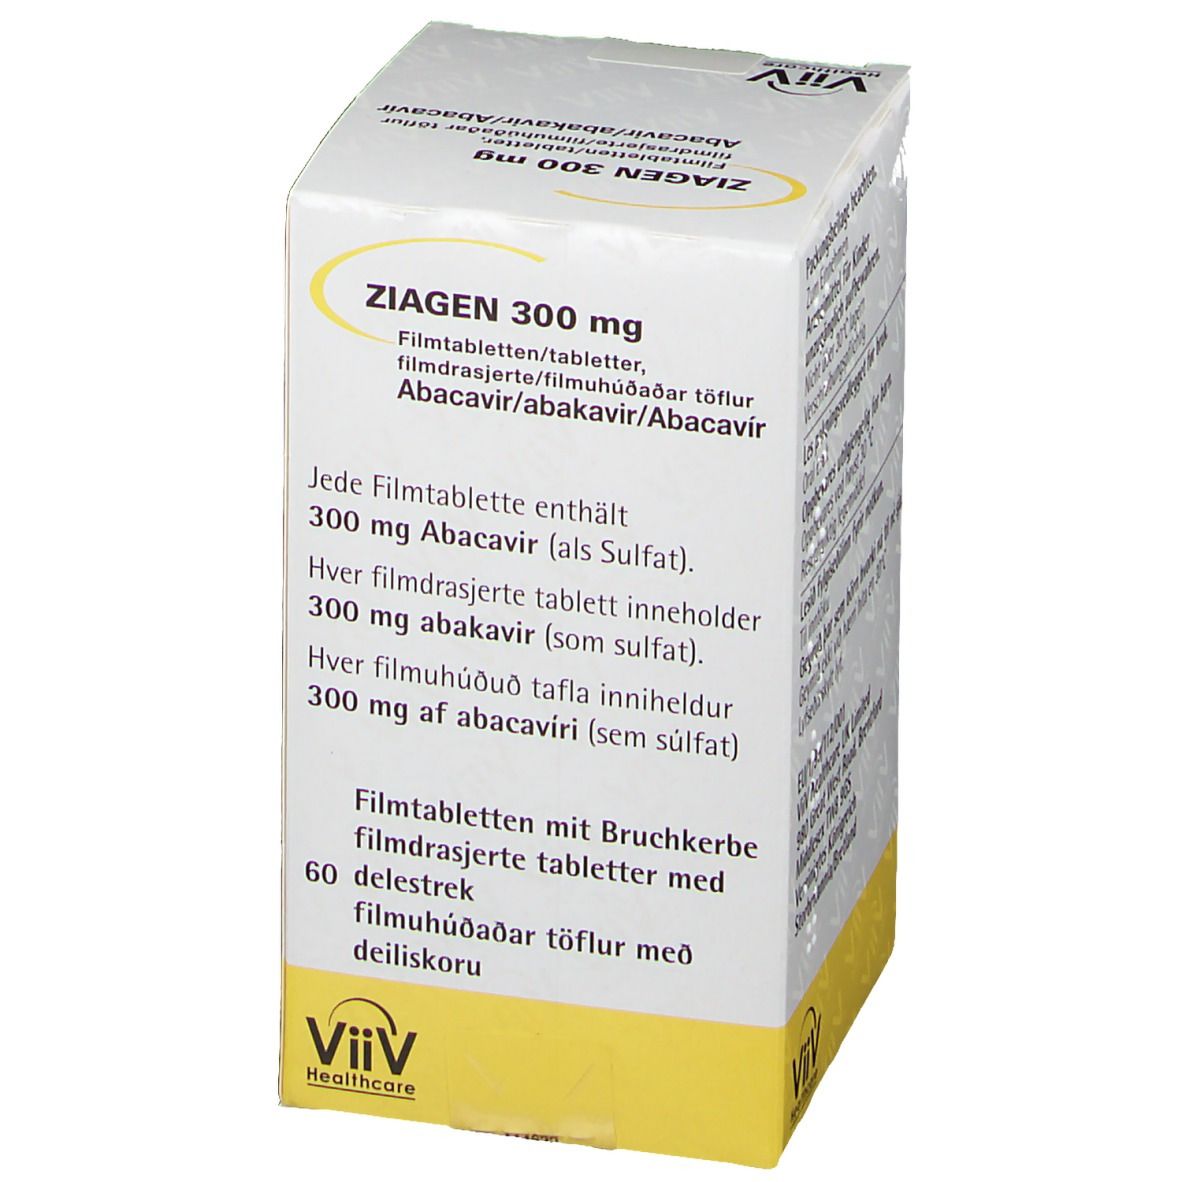 ZIAGEN® 300 mg